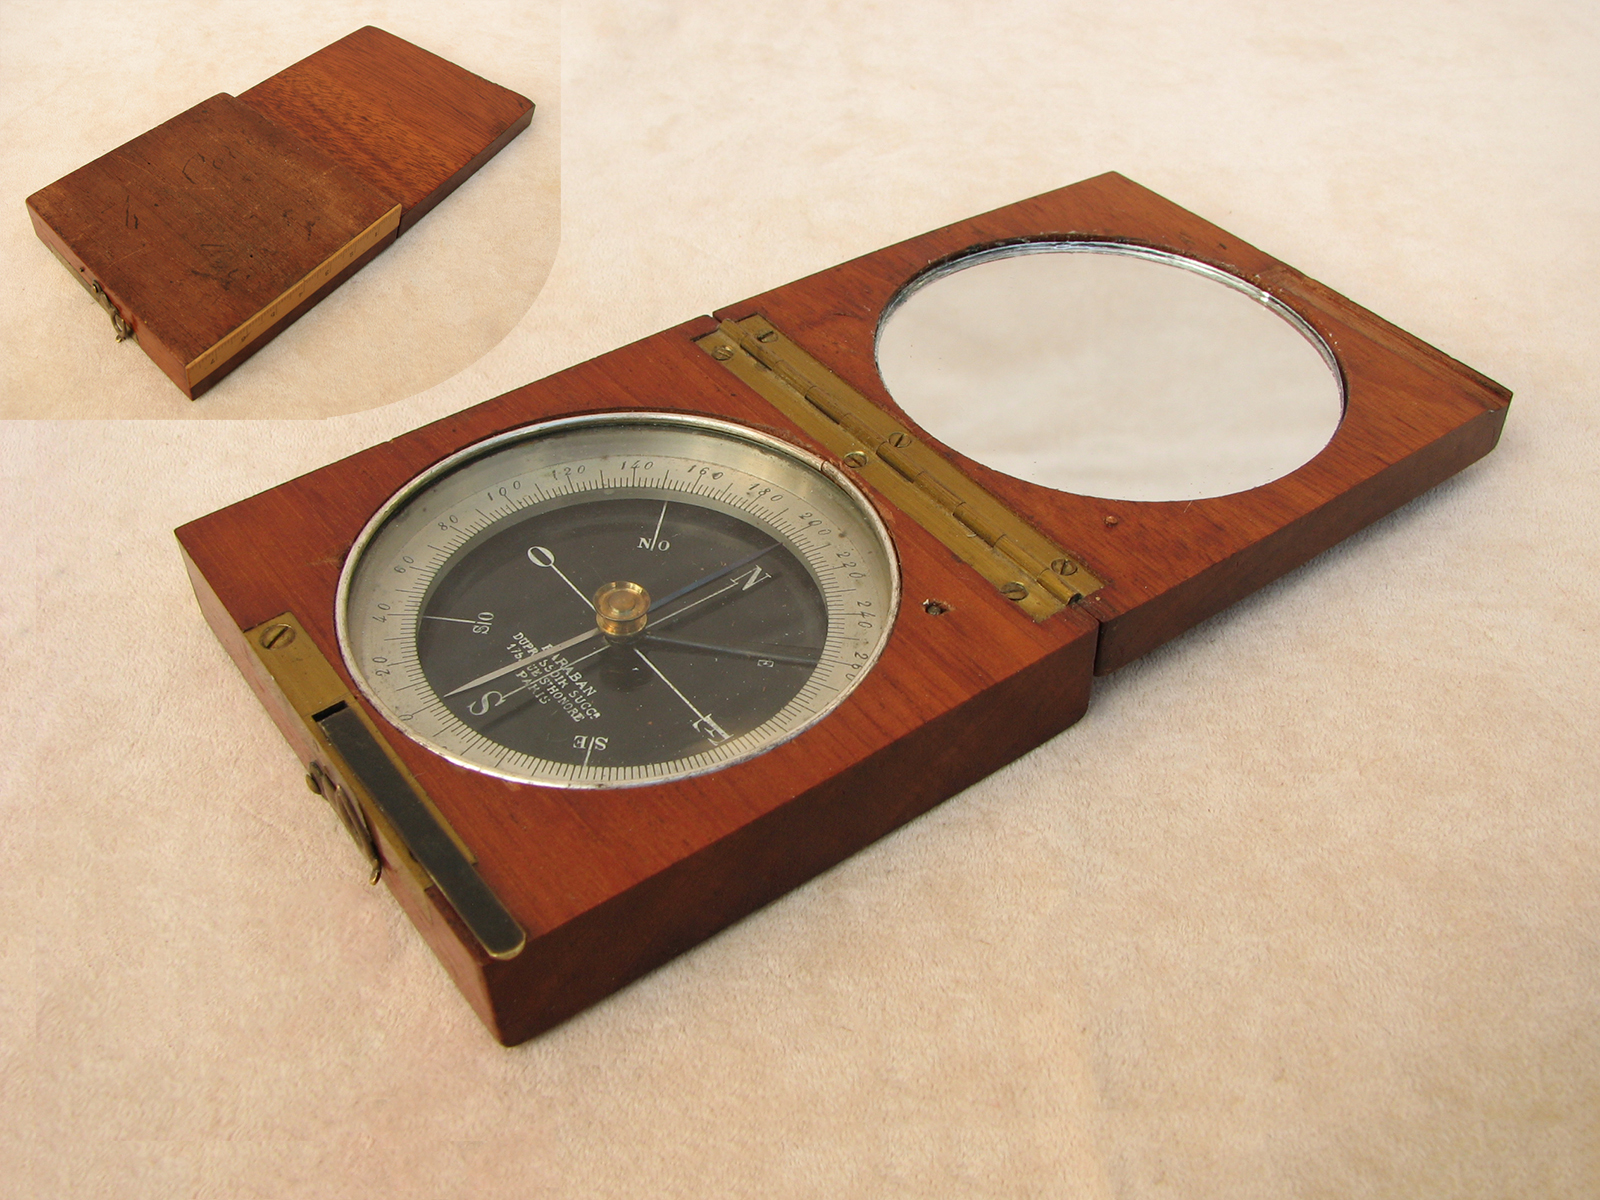 19th century French pocket compass signed BARABAN, DUPRESSOIR SUCCr, PARIS